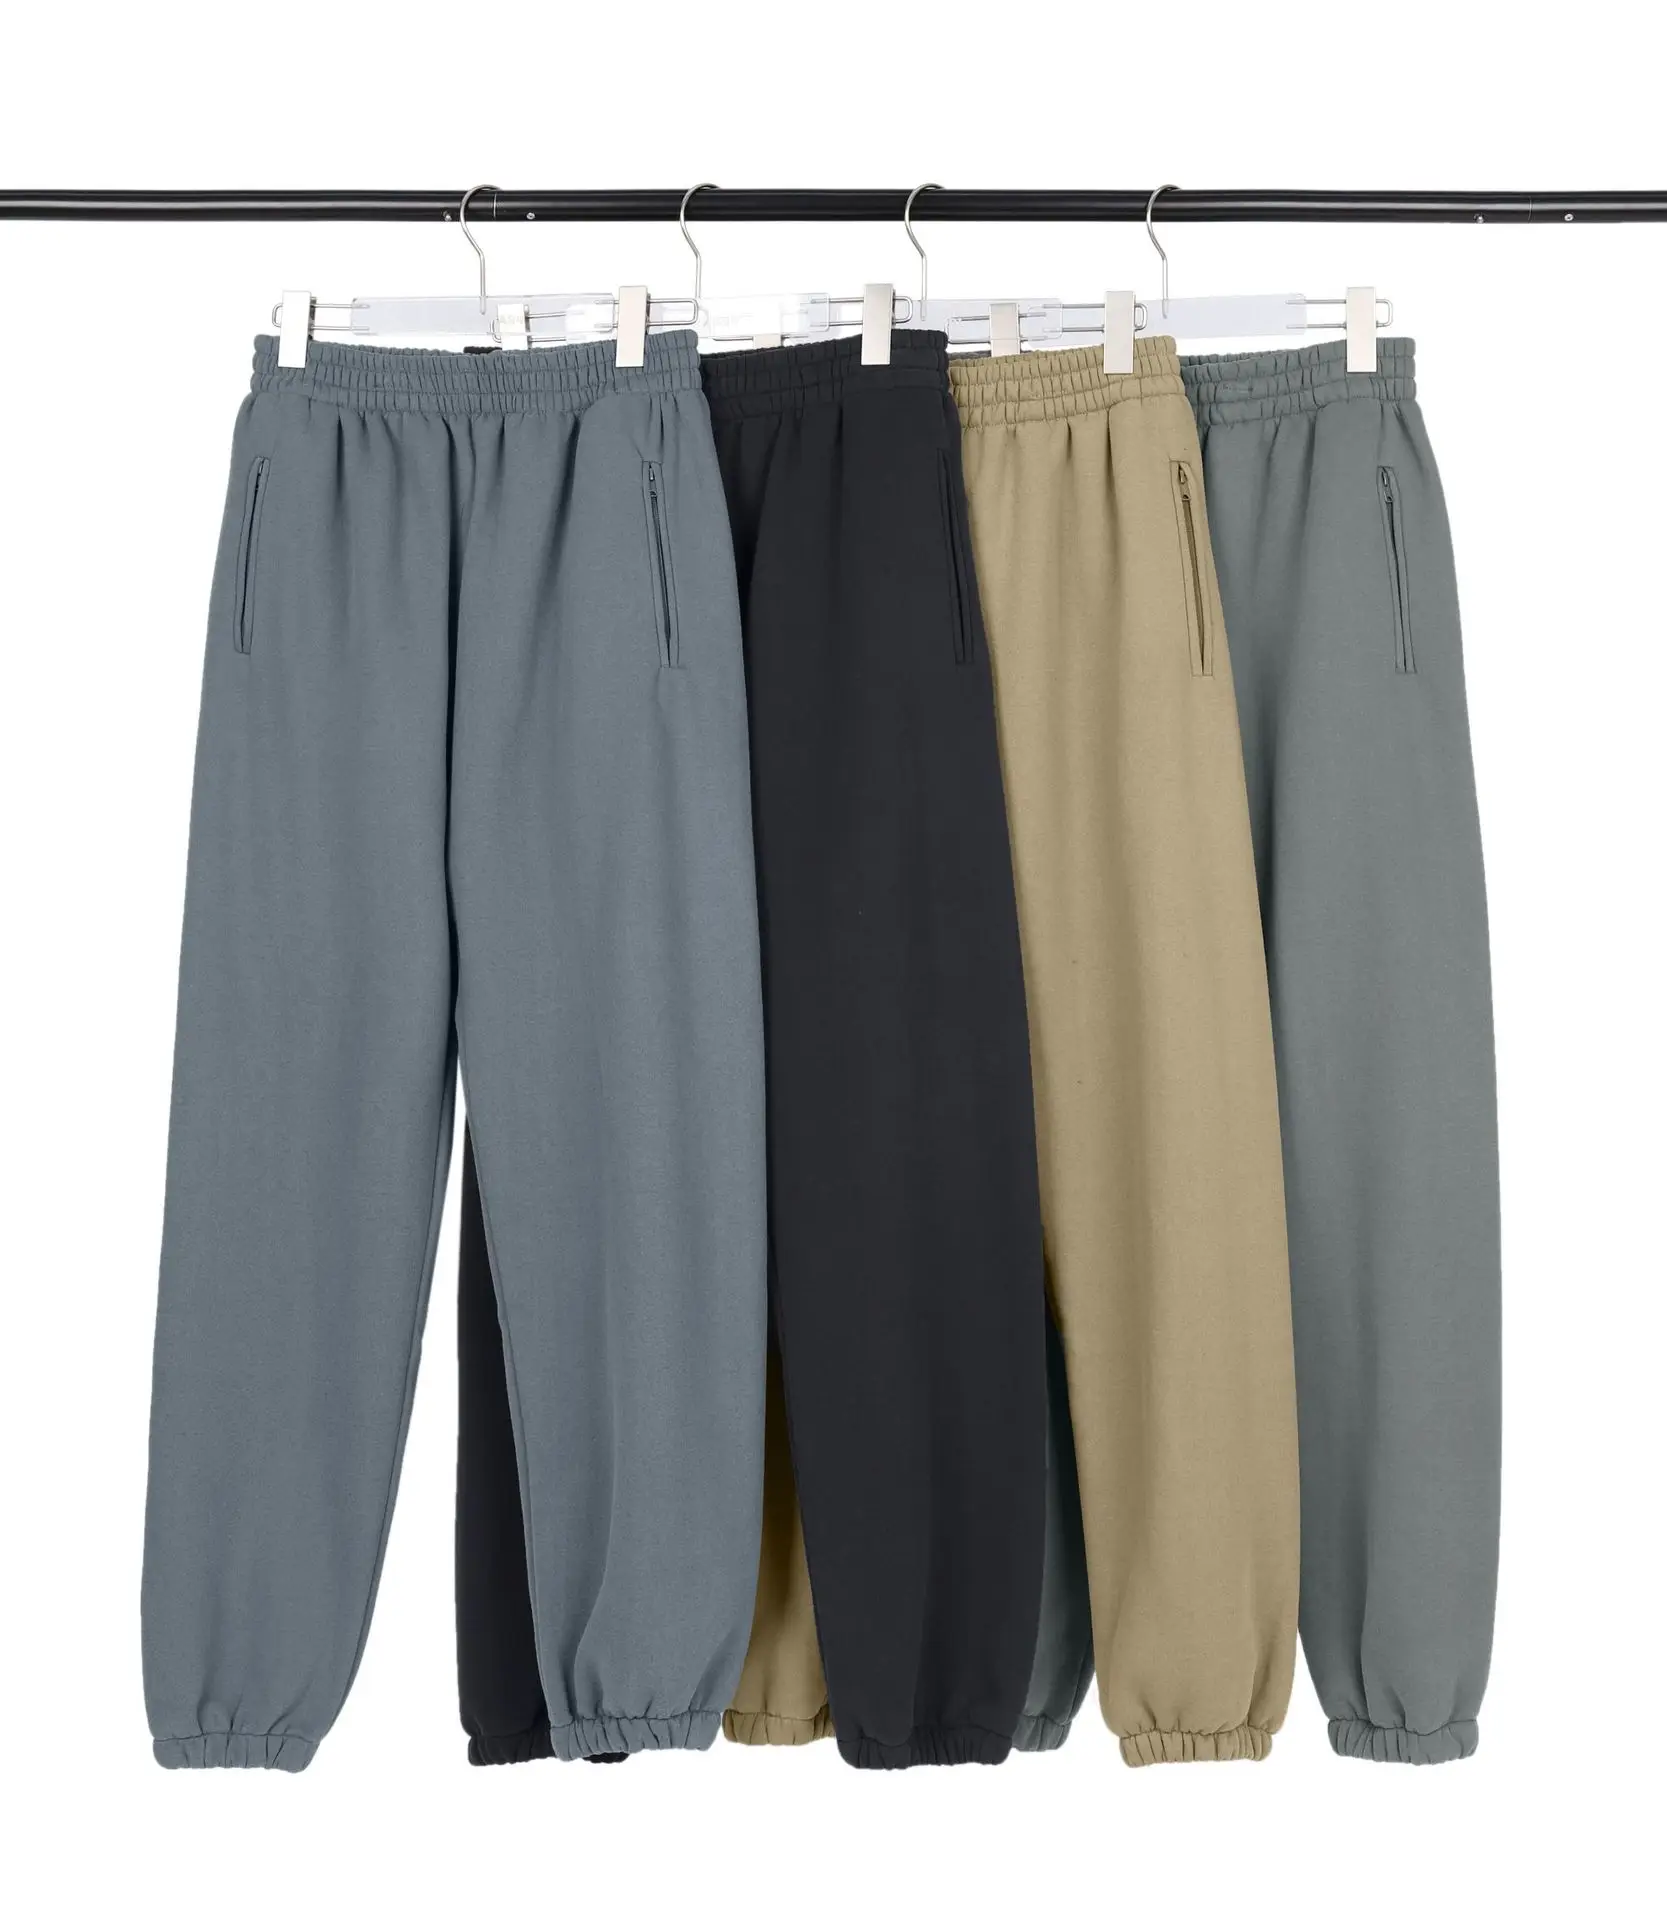 

kanye west season 6 blank 350 g cotton Fleece Baggy Sweat Pants Sweat Pants for Men unisex jogger pants, Customized color